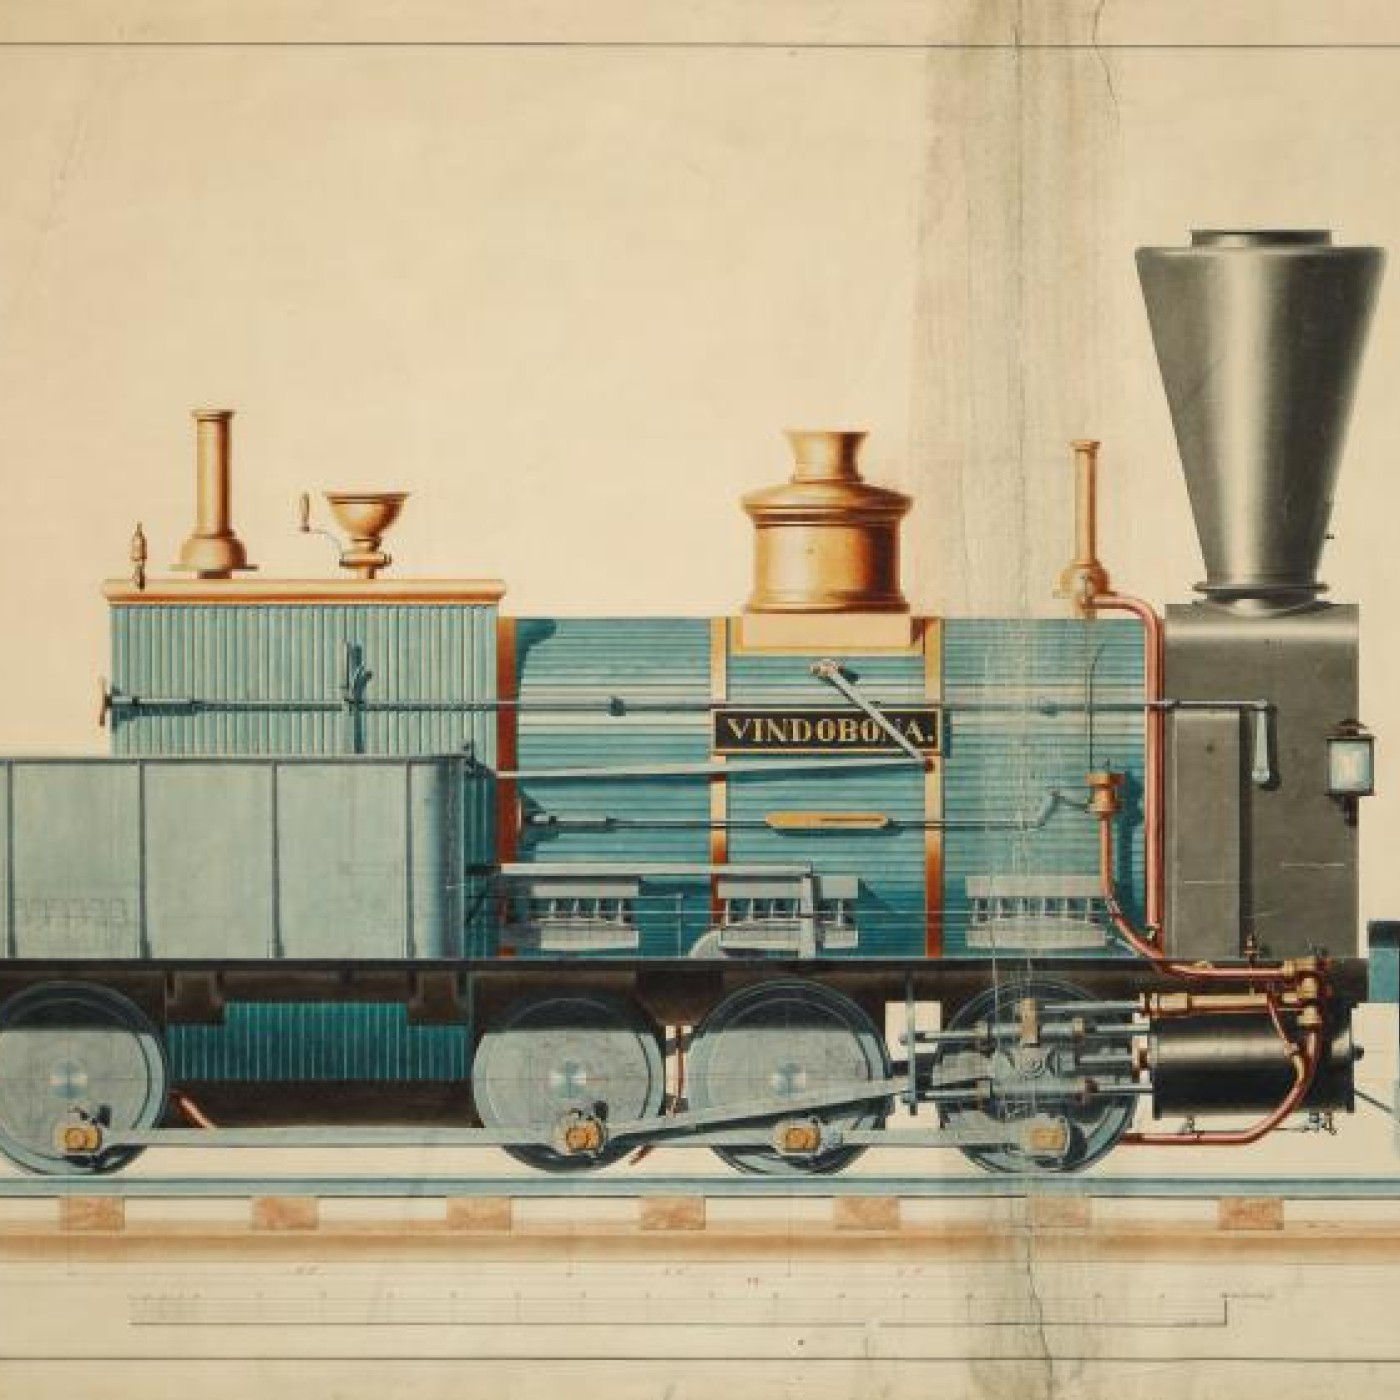 Vindobona steam locomotive, colored technical drawing, 1851: Vindobona steam locomotive, colored technical drawing, 1851